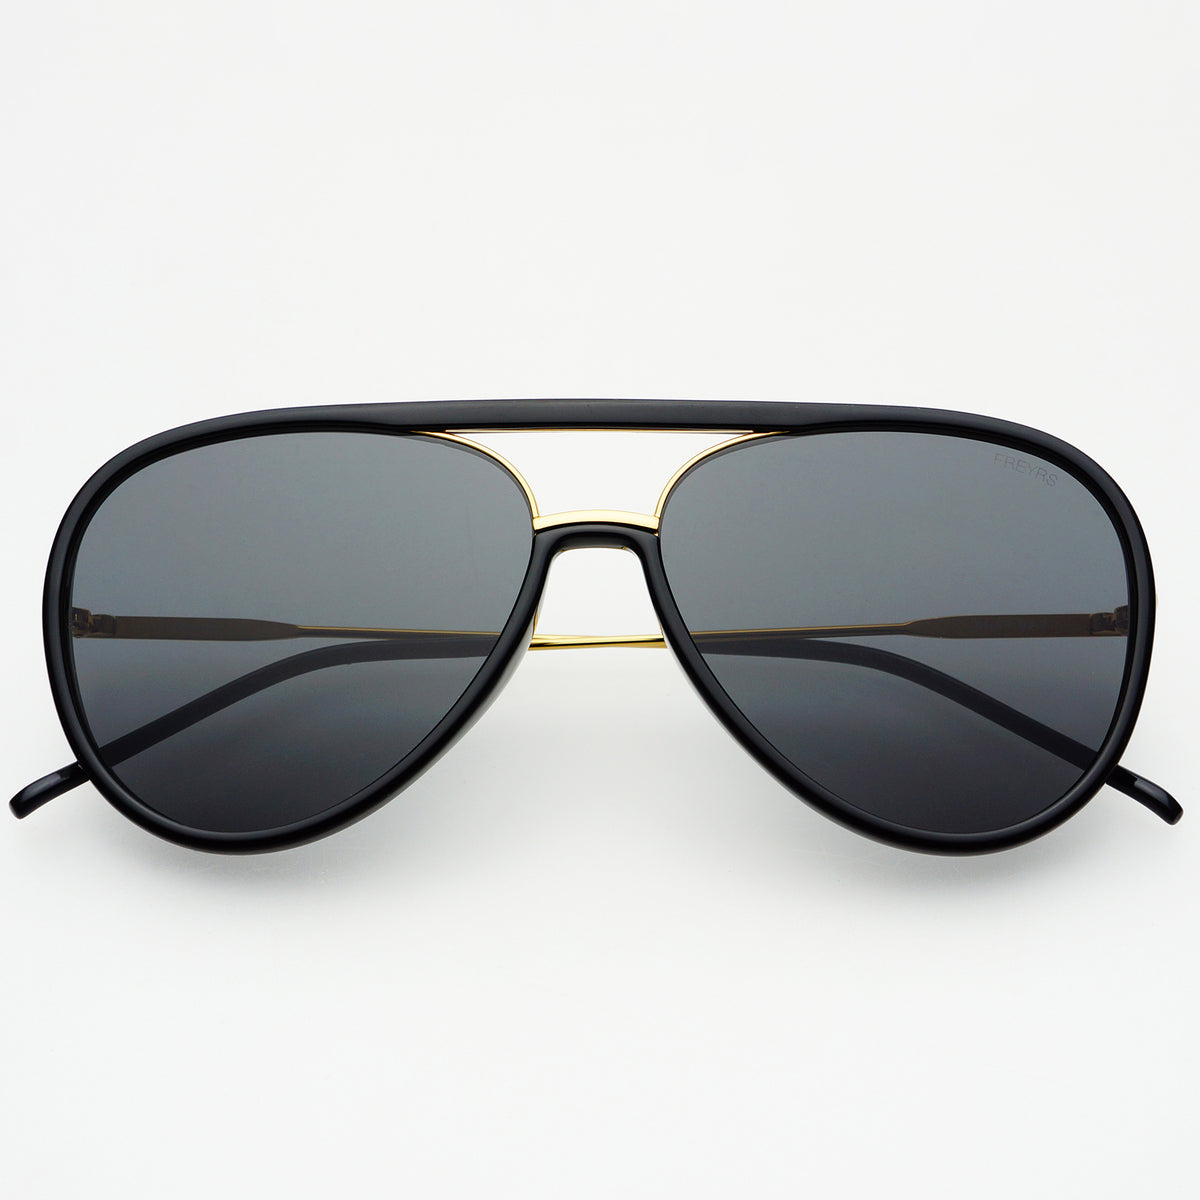 Shay Black Aviator Sunglasses by FREYRS Eyewear